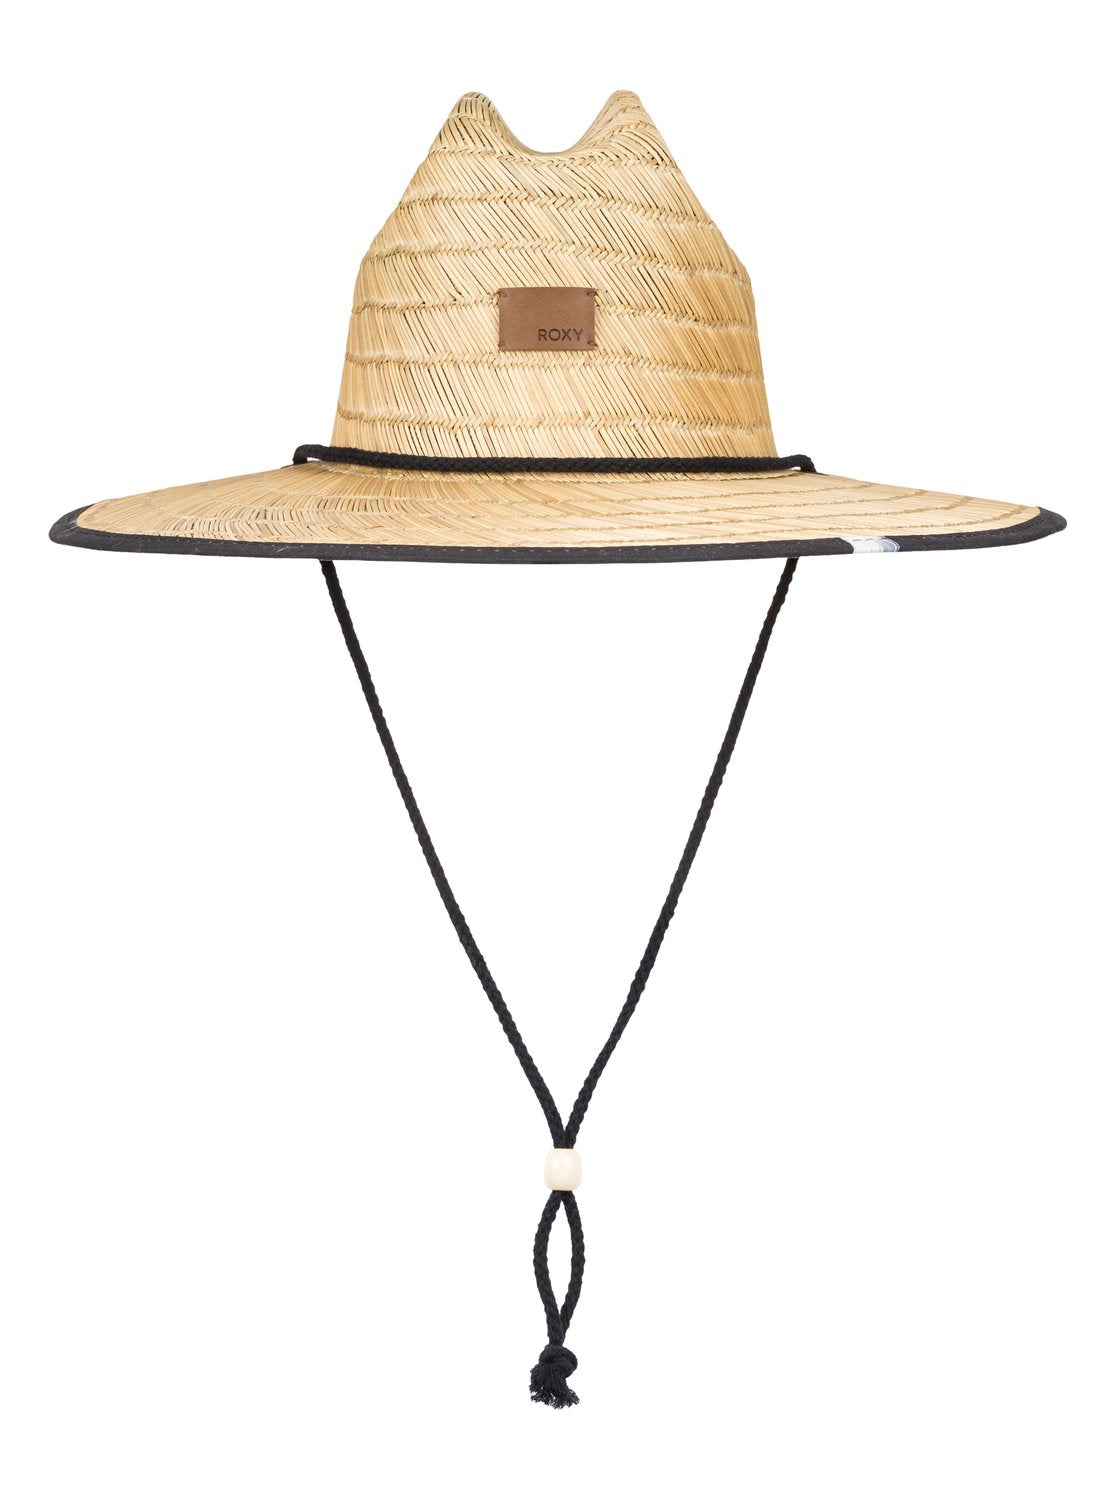 Roxy Tomboy Straw Lifeguard Hat KVJ8-TrueBlack S/M